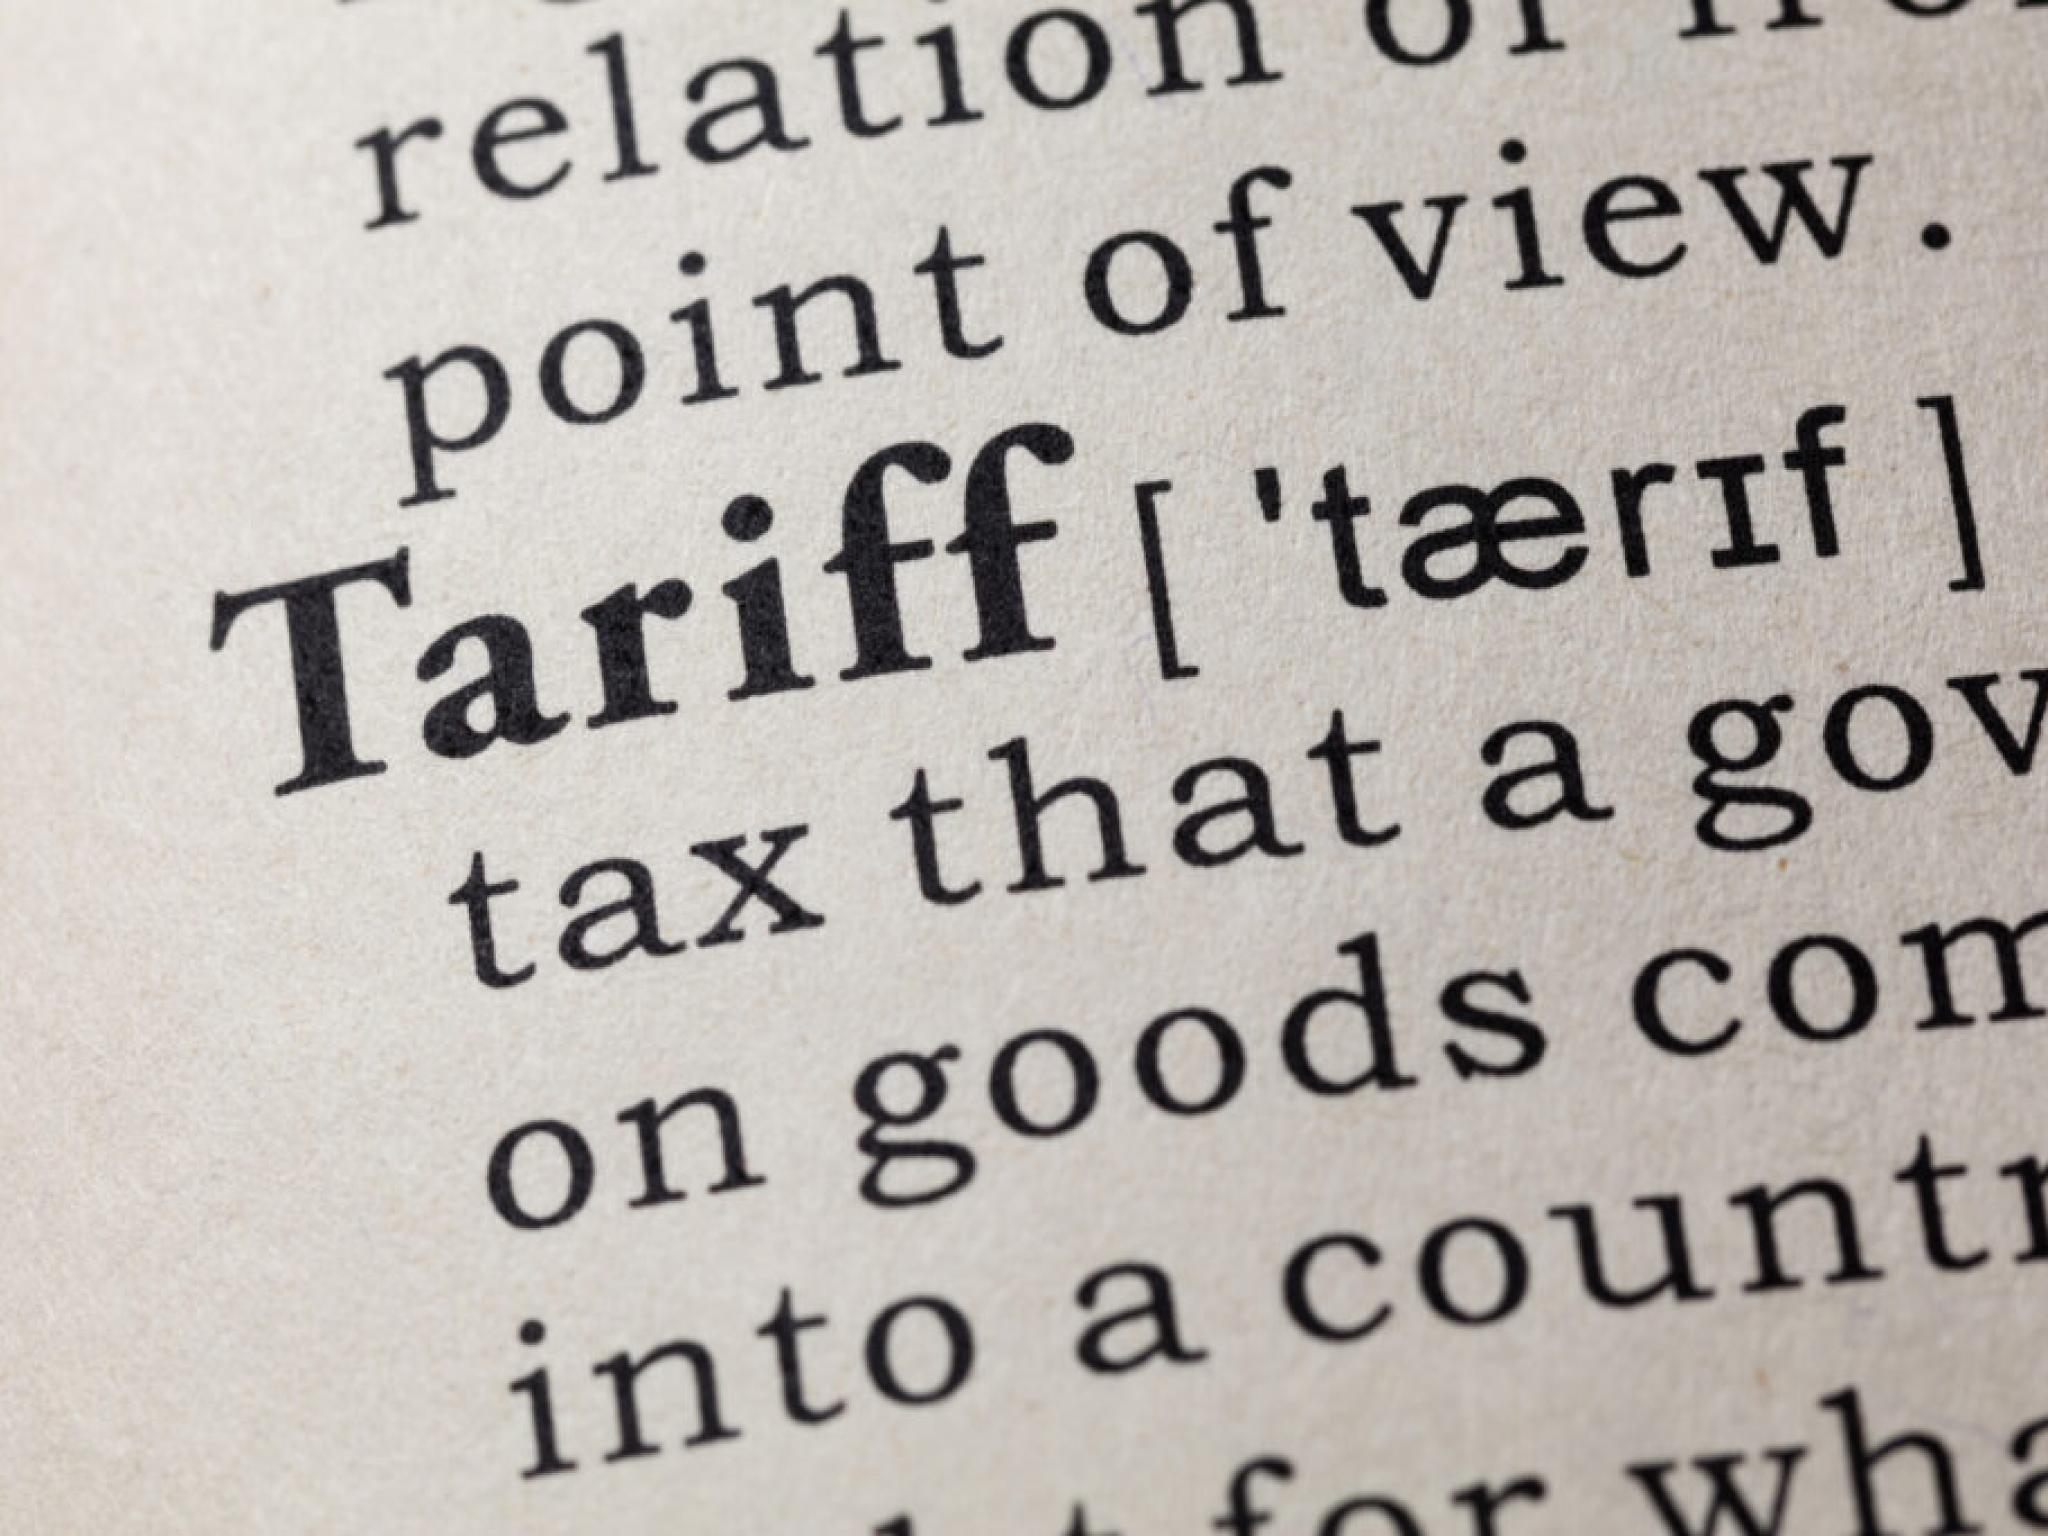  us-election-and-tariff-prospects-set-to-threaten-internationally-exposed-stocks-goldman-sachs-warns 